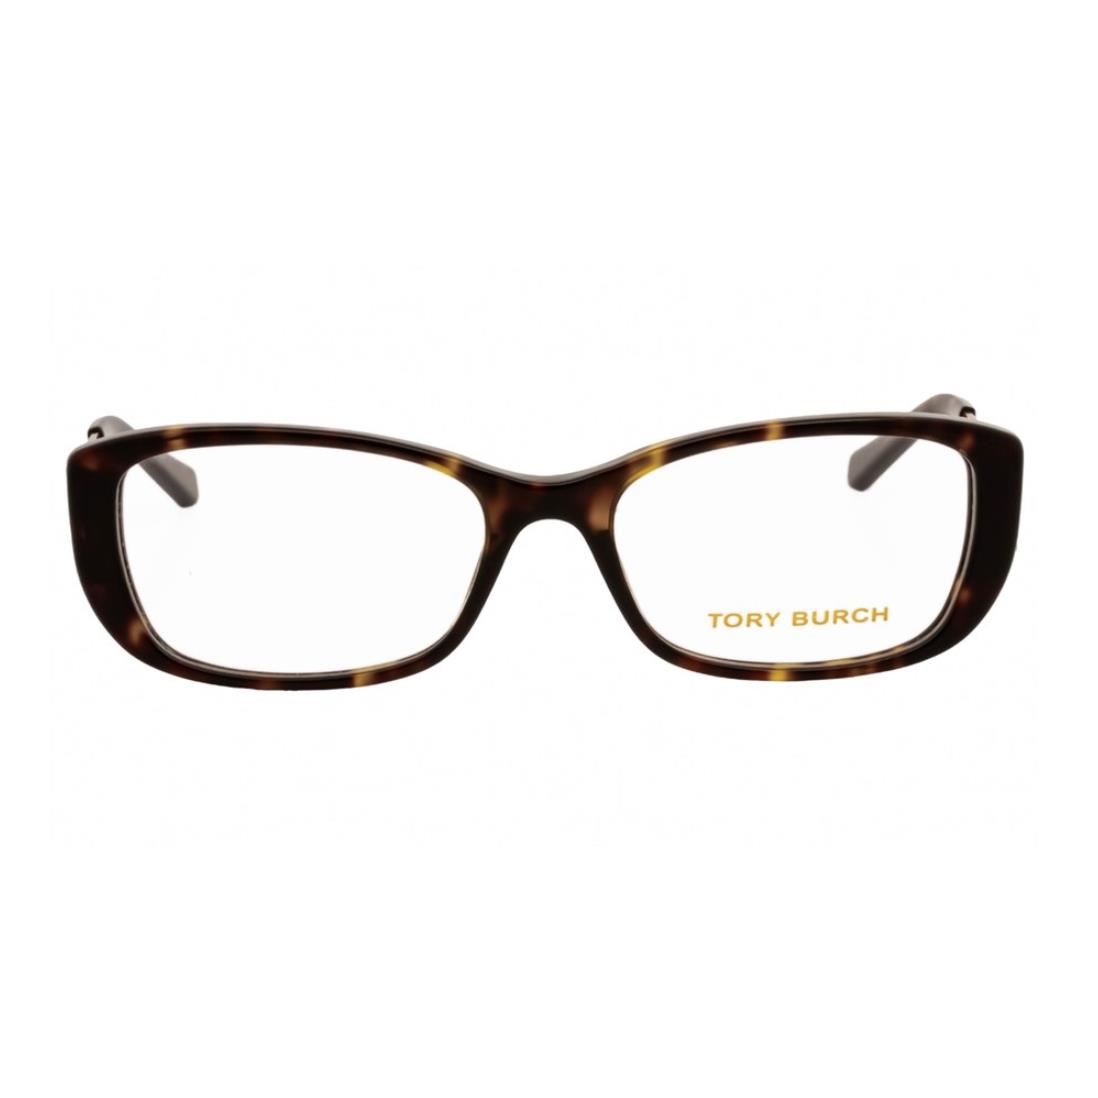 Tory Burch eyeglasses  - Tortoise Frame 0